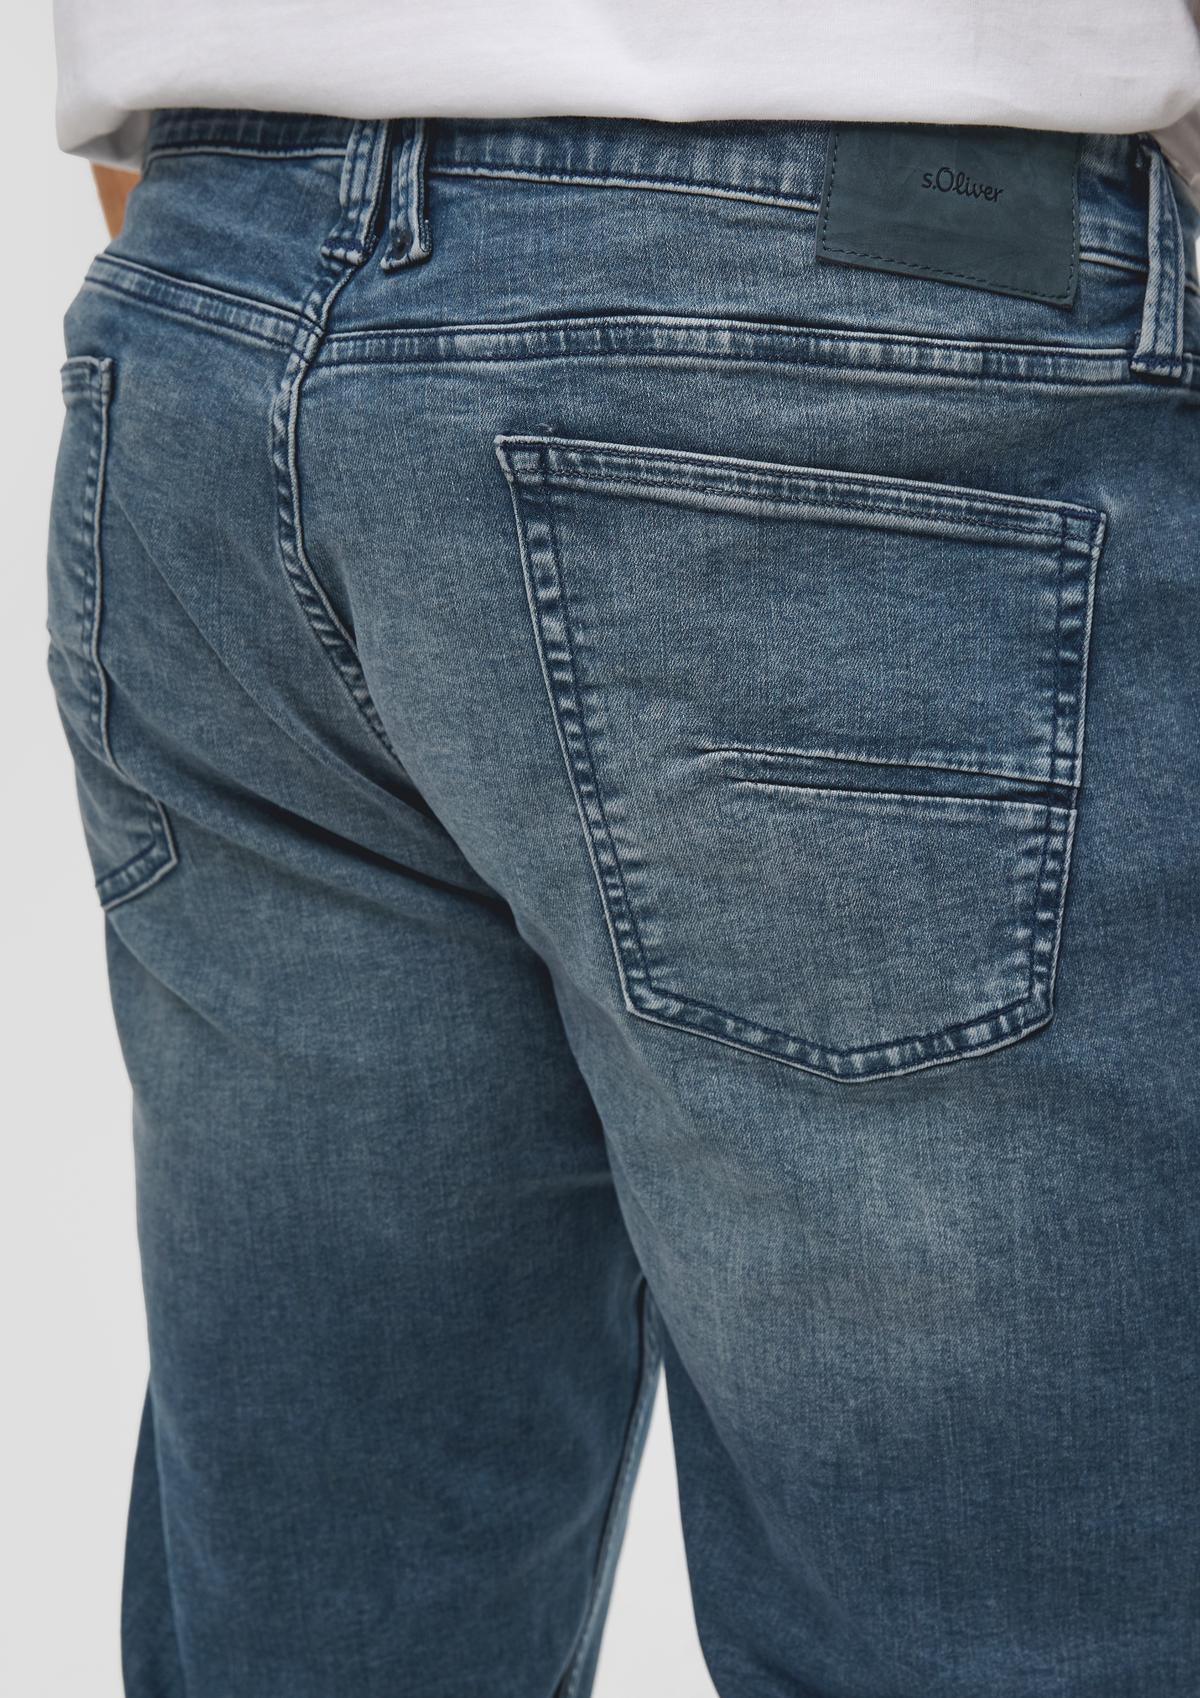 York jeans / regular / regular fit mid rise / - blue leg